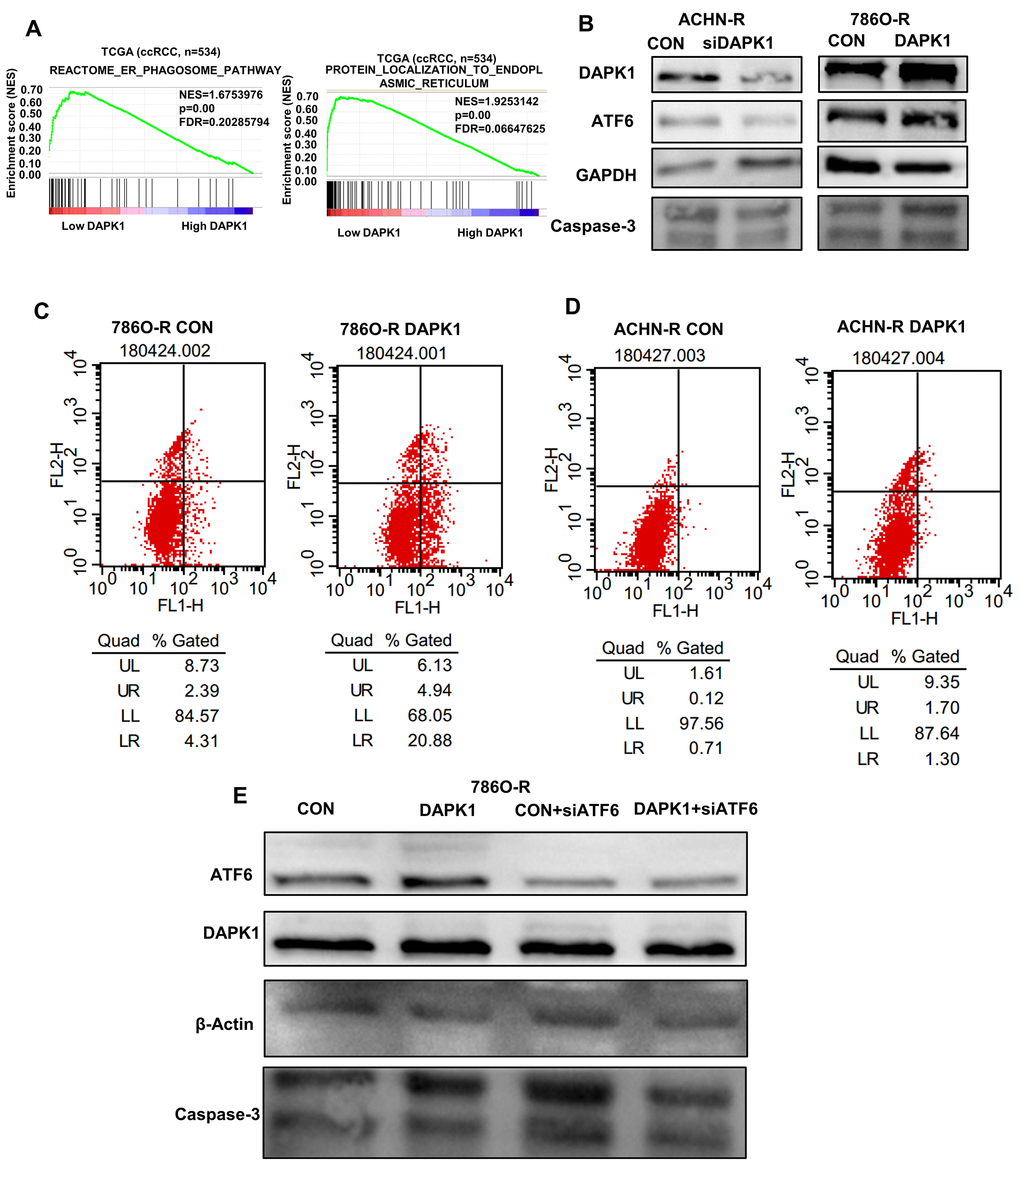 DAPK1 regulates endoplasmic reticulum stress-mediated apoptosis. (A) GSEA shows that DAPK1 expression correlates with reactome